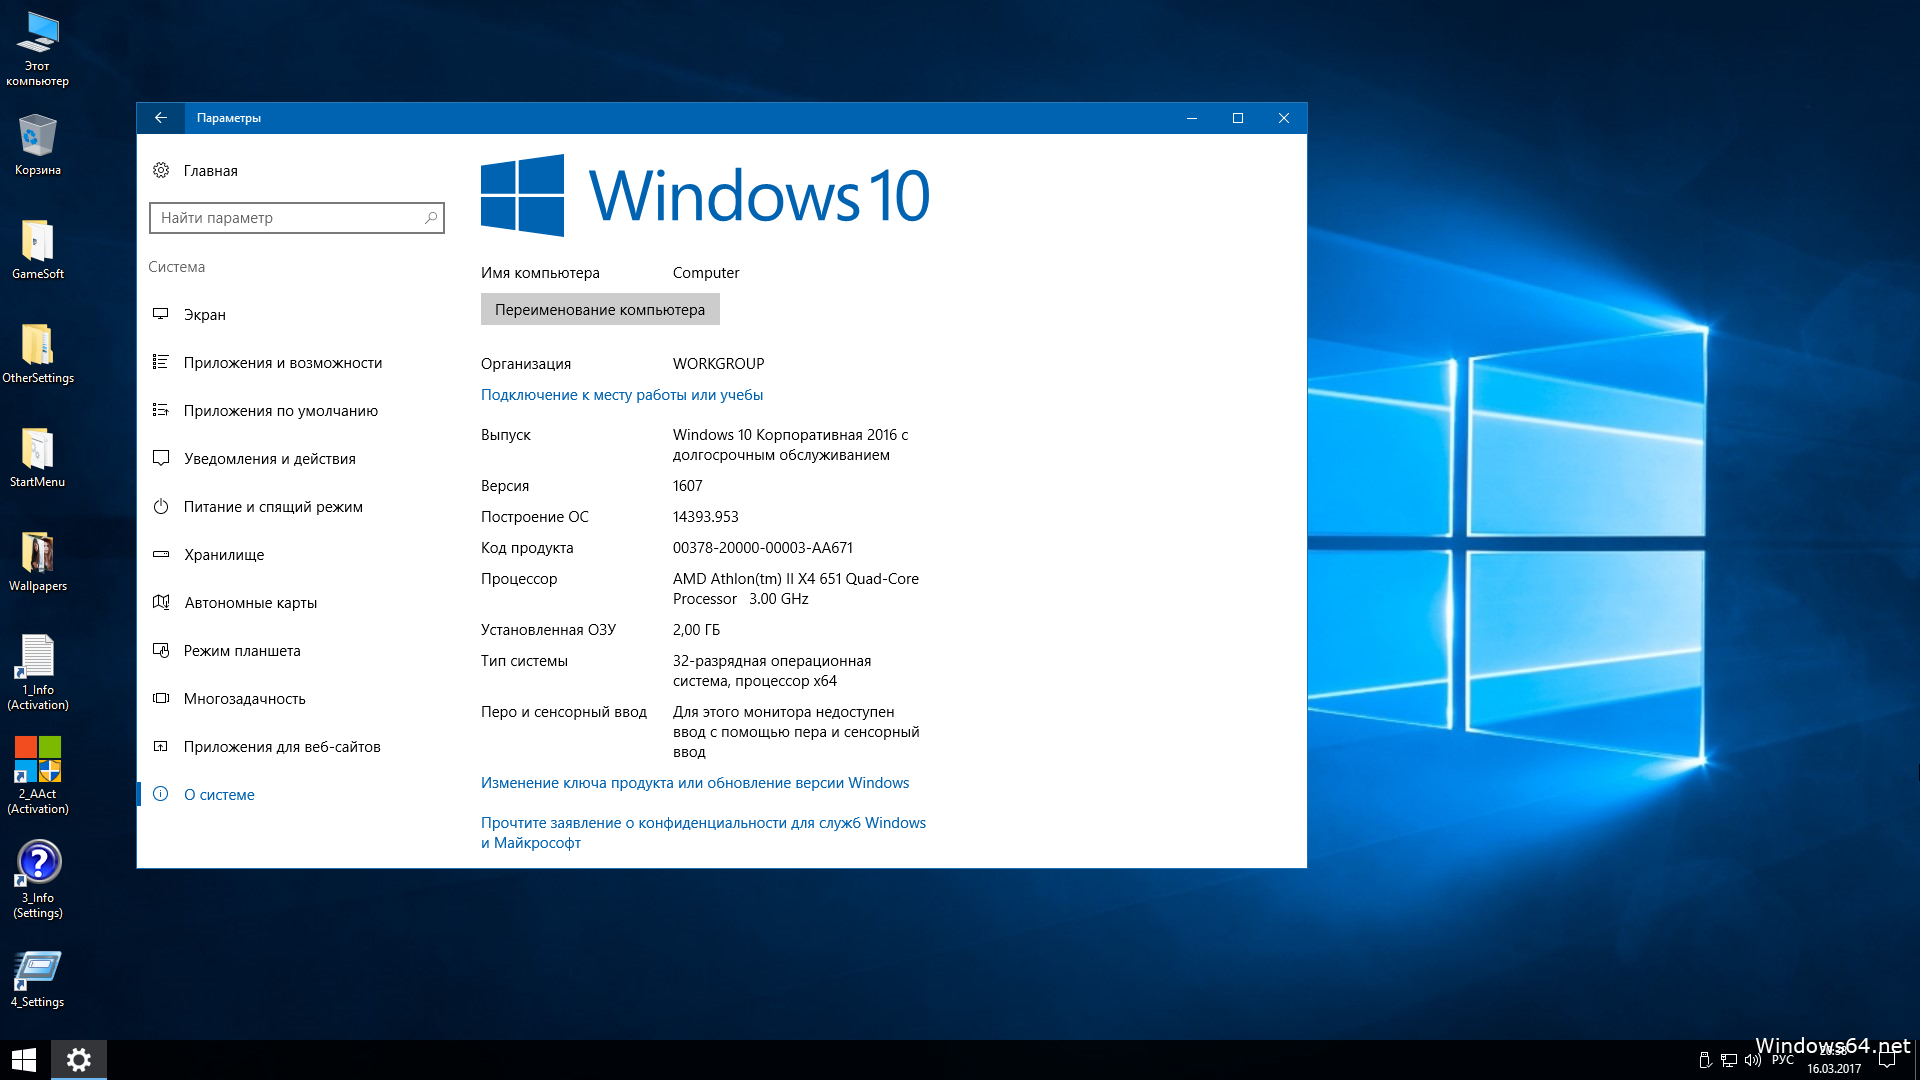 Виндовс 10 clean. ОС Microsoft Windows 10. Windows 10 Enterprise. Microsoft Windows 10 корпоративная. Windows 10 Enterprise 2016 LTSB.